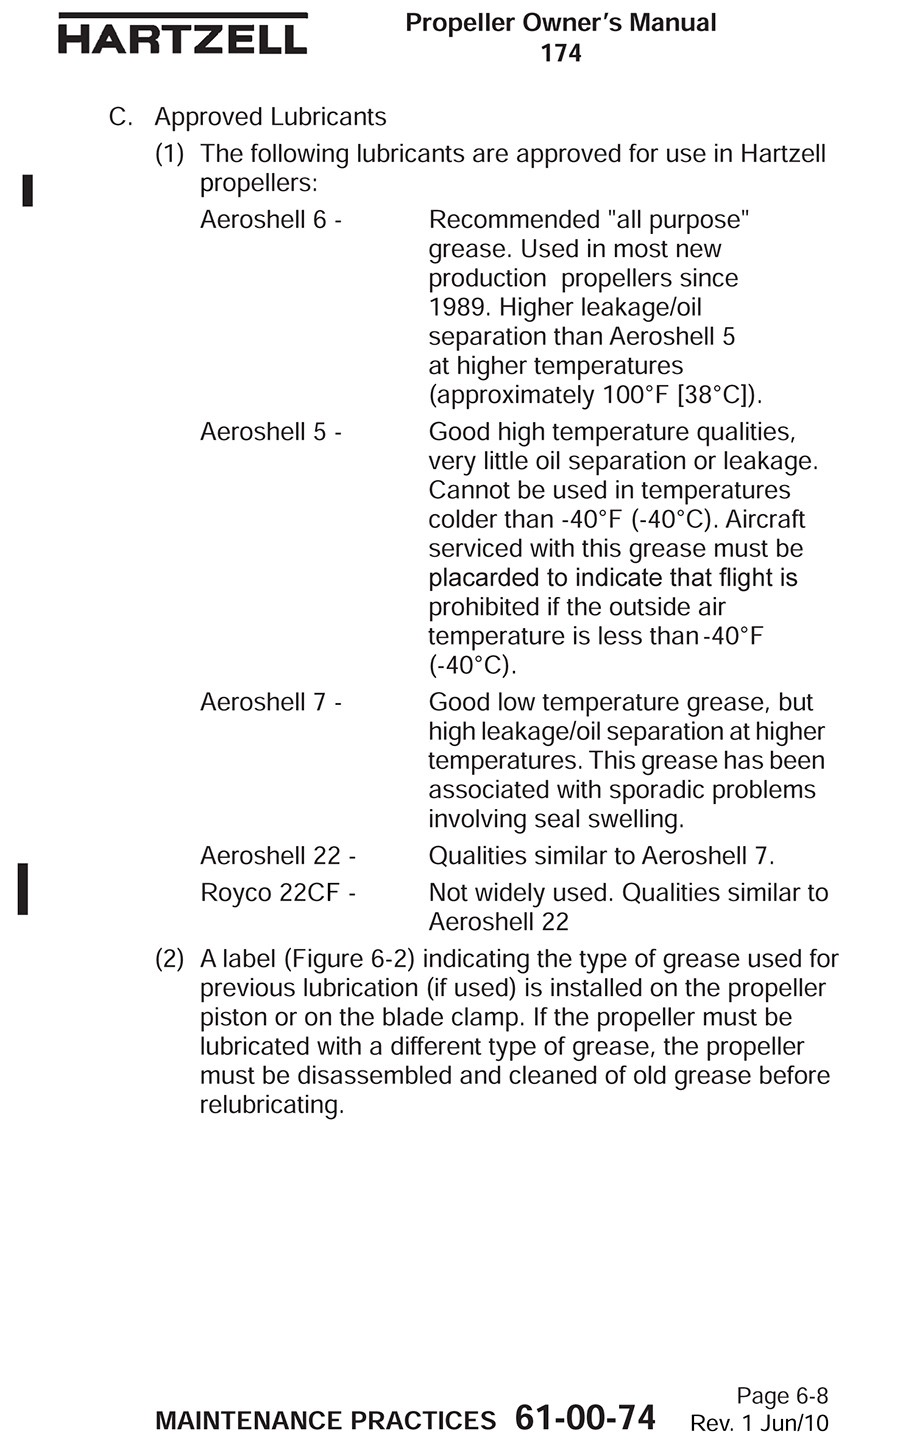 Hartzell Prop Manual 2010 page132